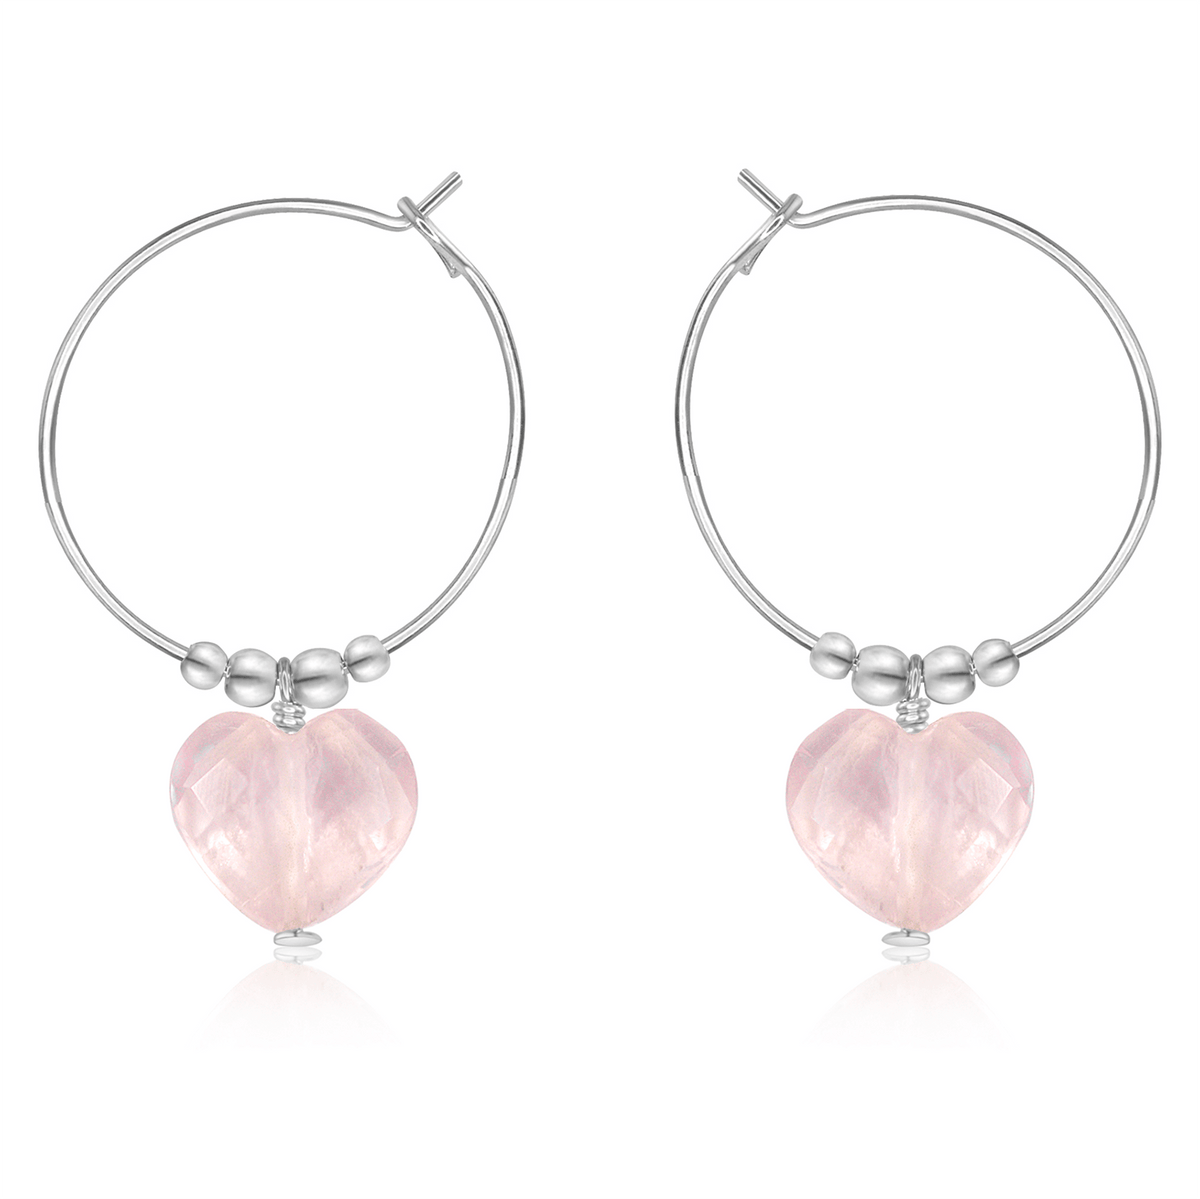 Rose Quartz Crystal Heart Dangle Hoop Earrings - Rose Quartz Crystal Heart Dangle Hoop Earrings - Sterling Silver - Luna Tide Handmade Crystal Jewellery